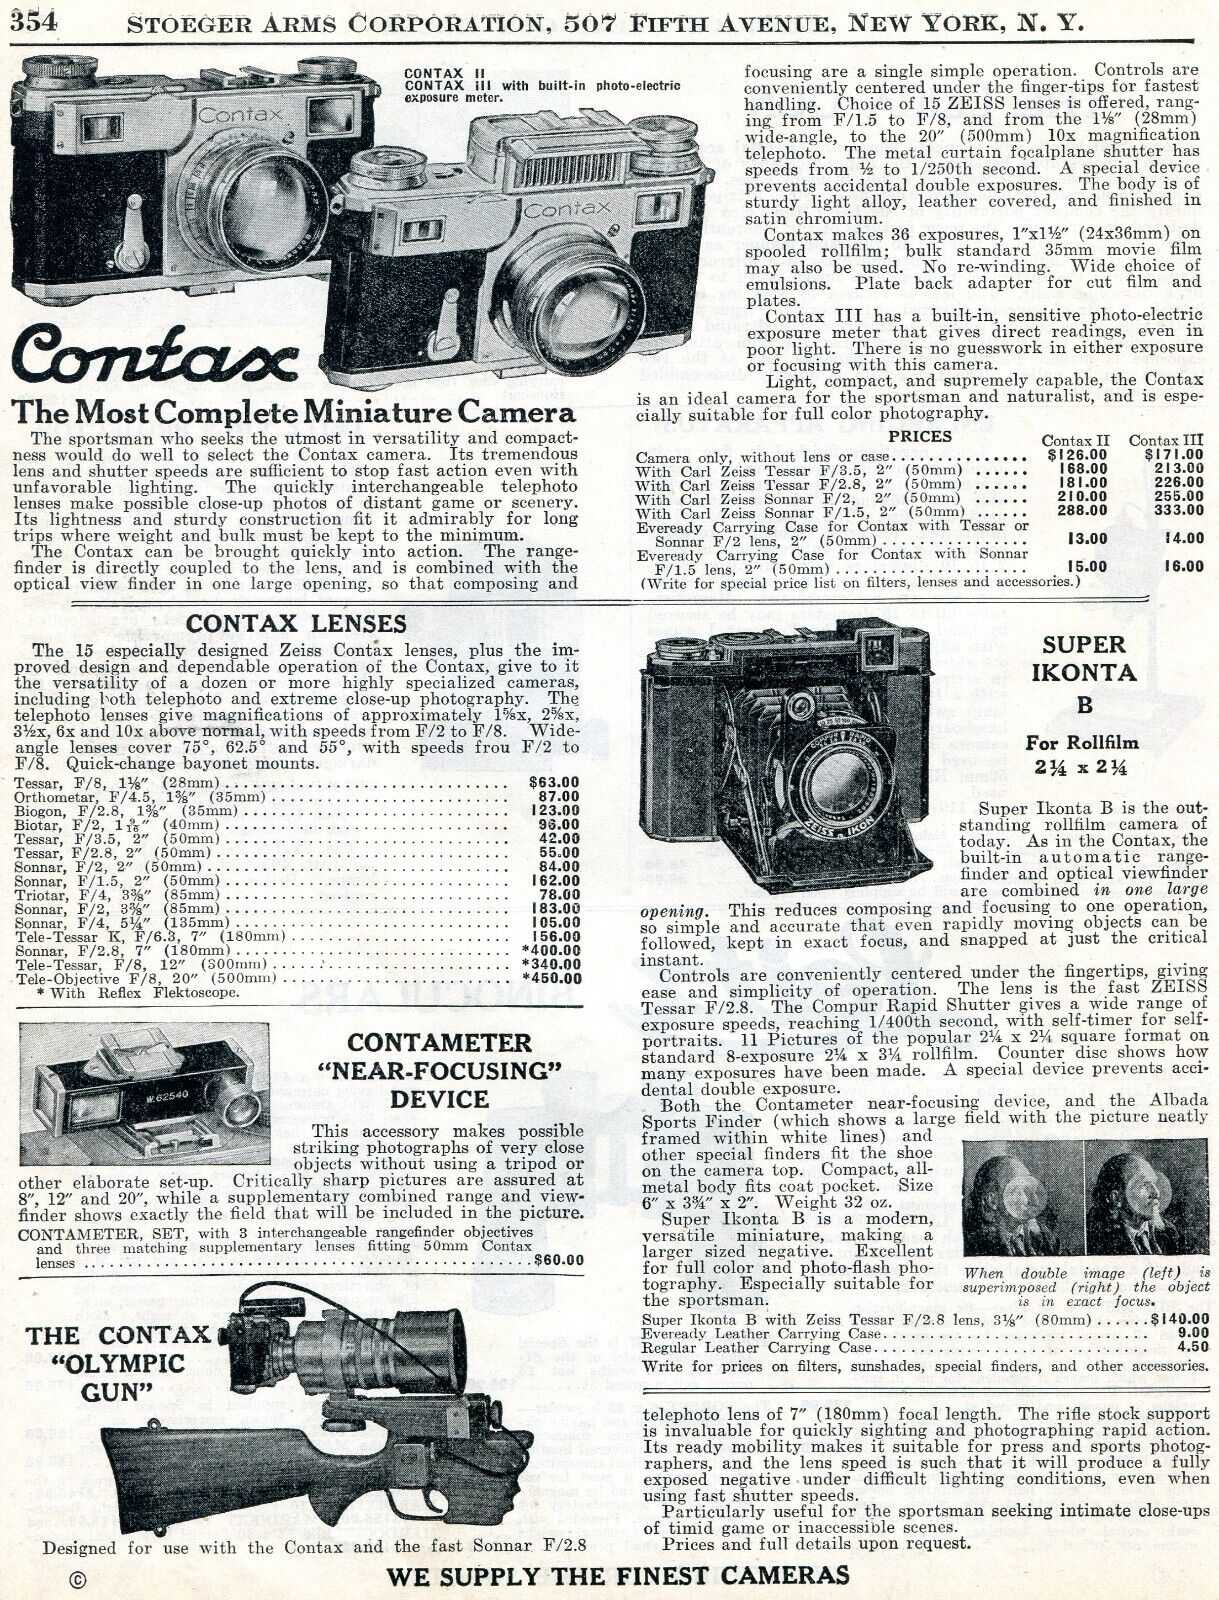 1939 Print Ad of Contax II III Miniature Camera, Super Ikonta B, Olympic Gun